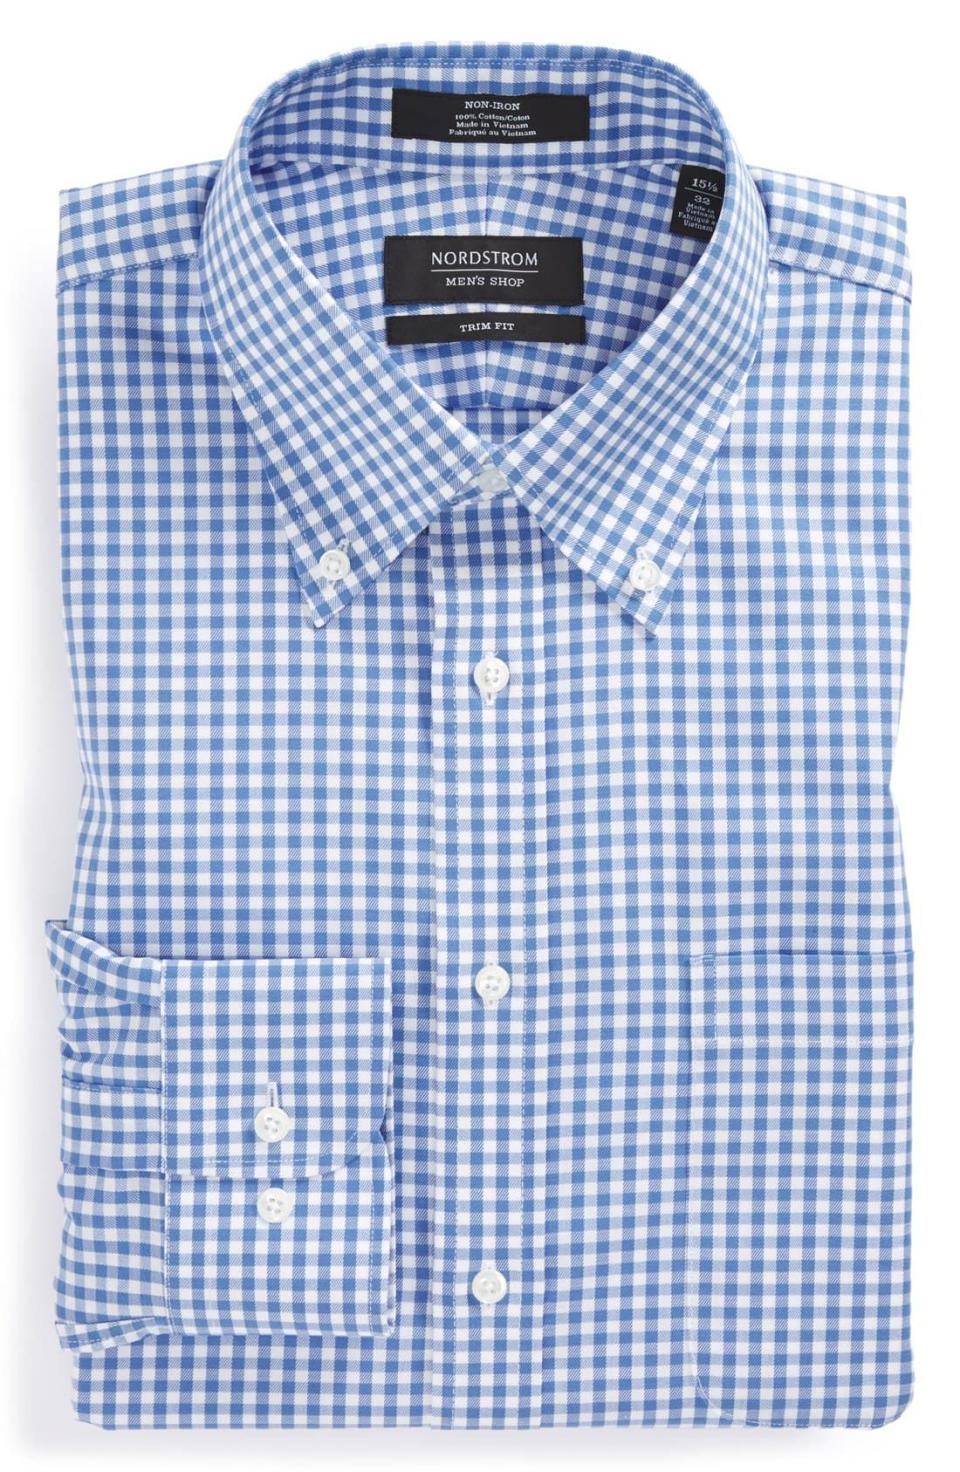 Nordstrom Men's Shop Trim Fit Non-Iron Gingham Dress Shirt